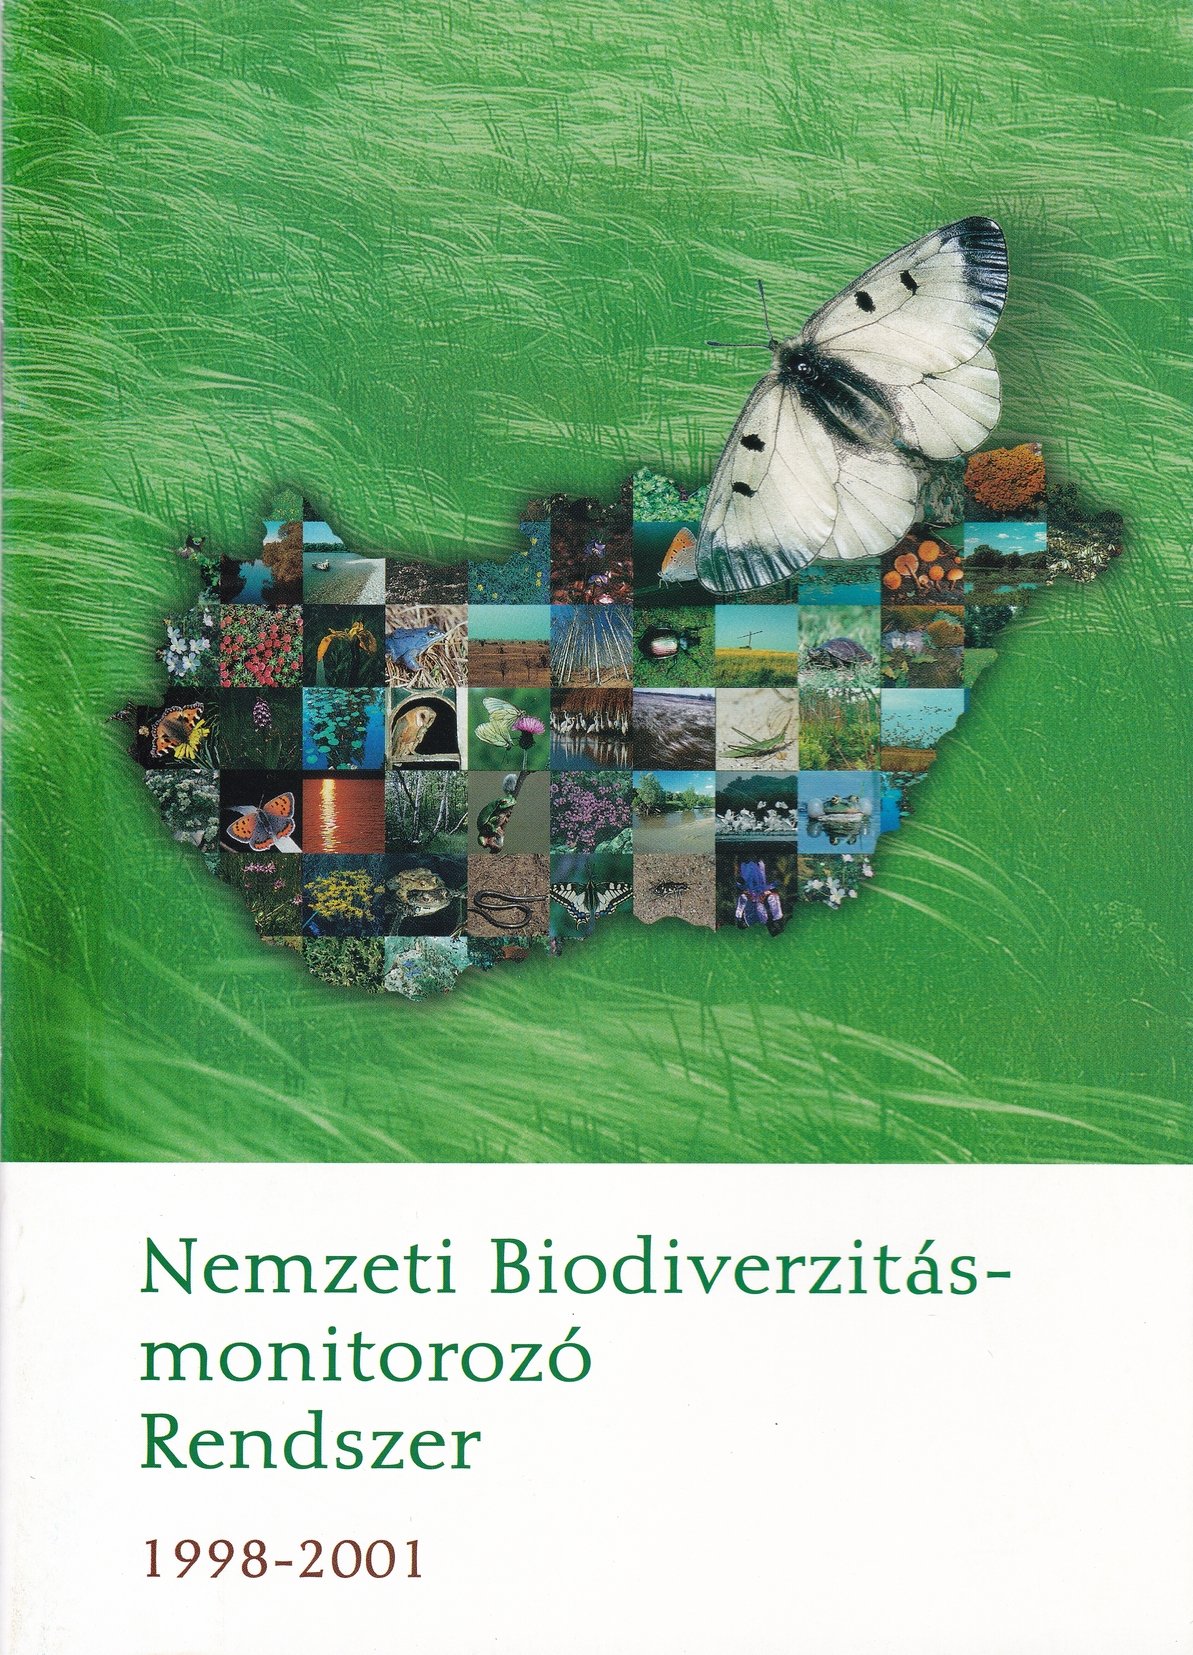 Nemzeti Biodiverzitás-monitorozó Rendszer 1998-2001 (Rippl-Rónai Múzeum CC BY-NC-ND)